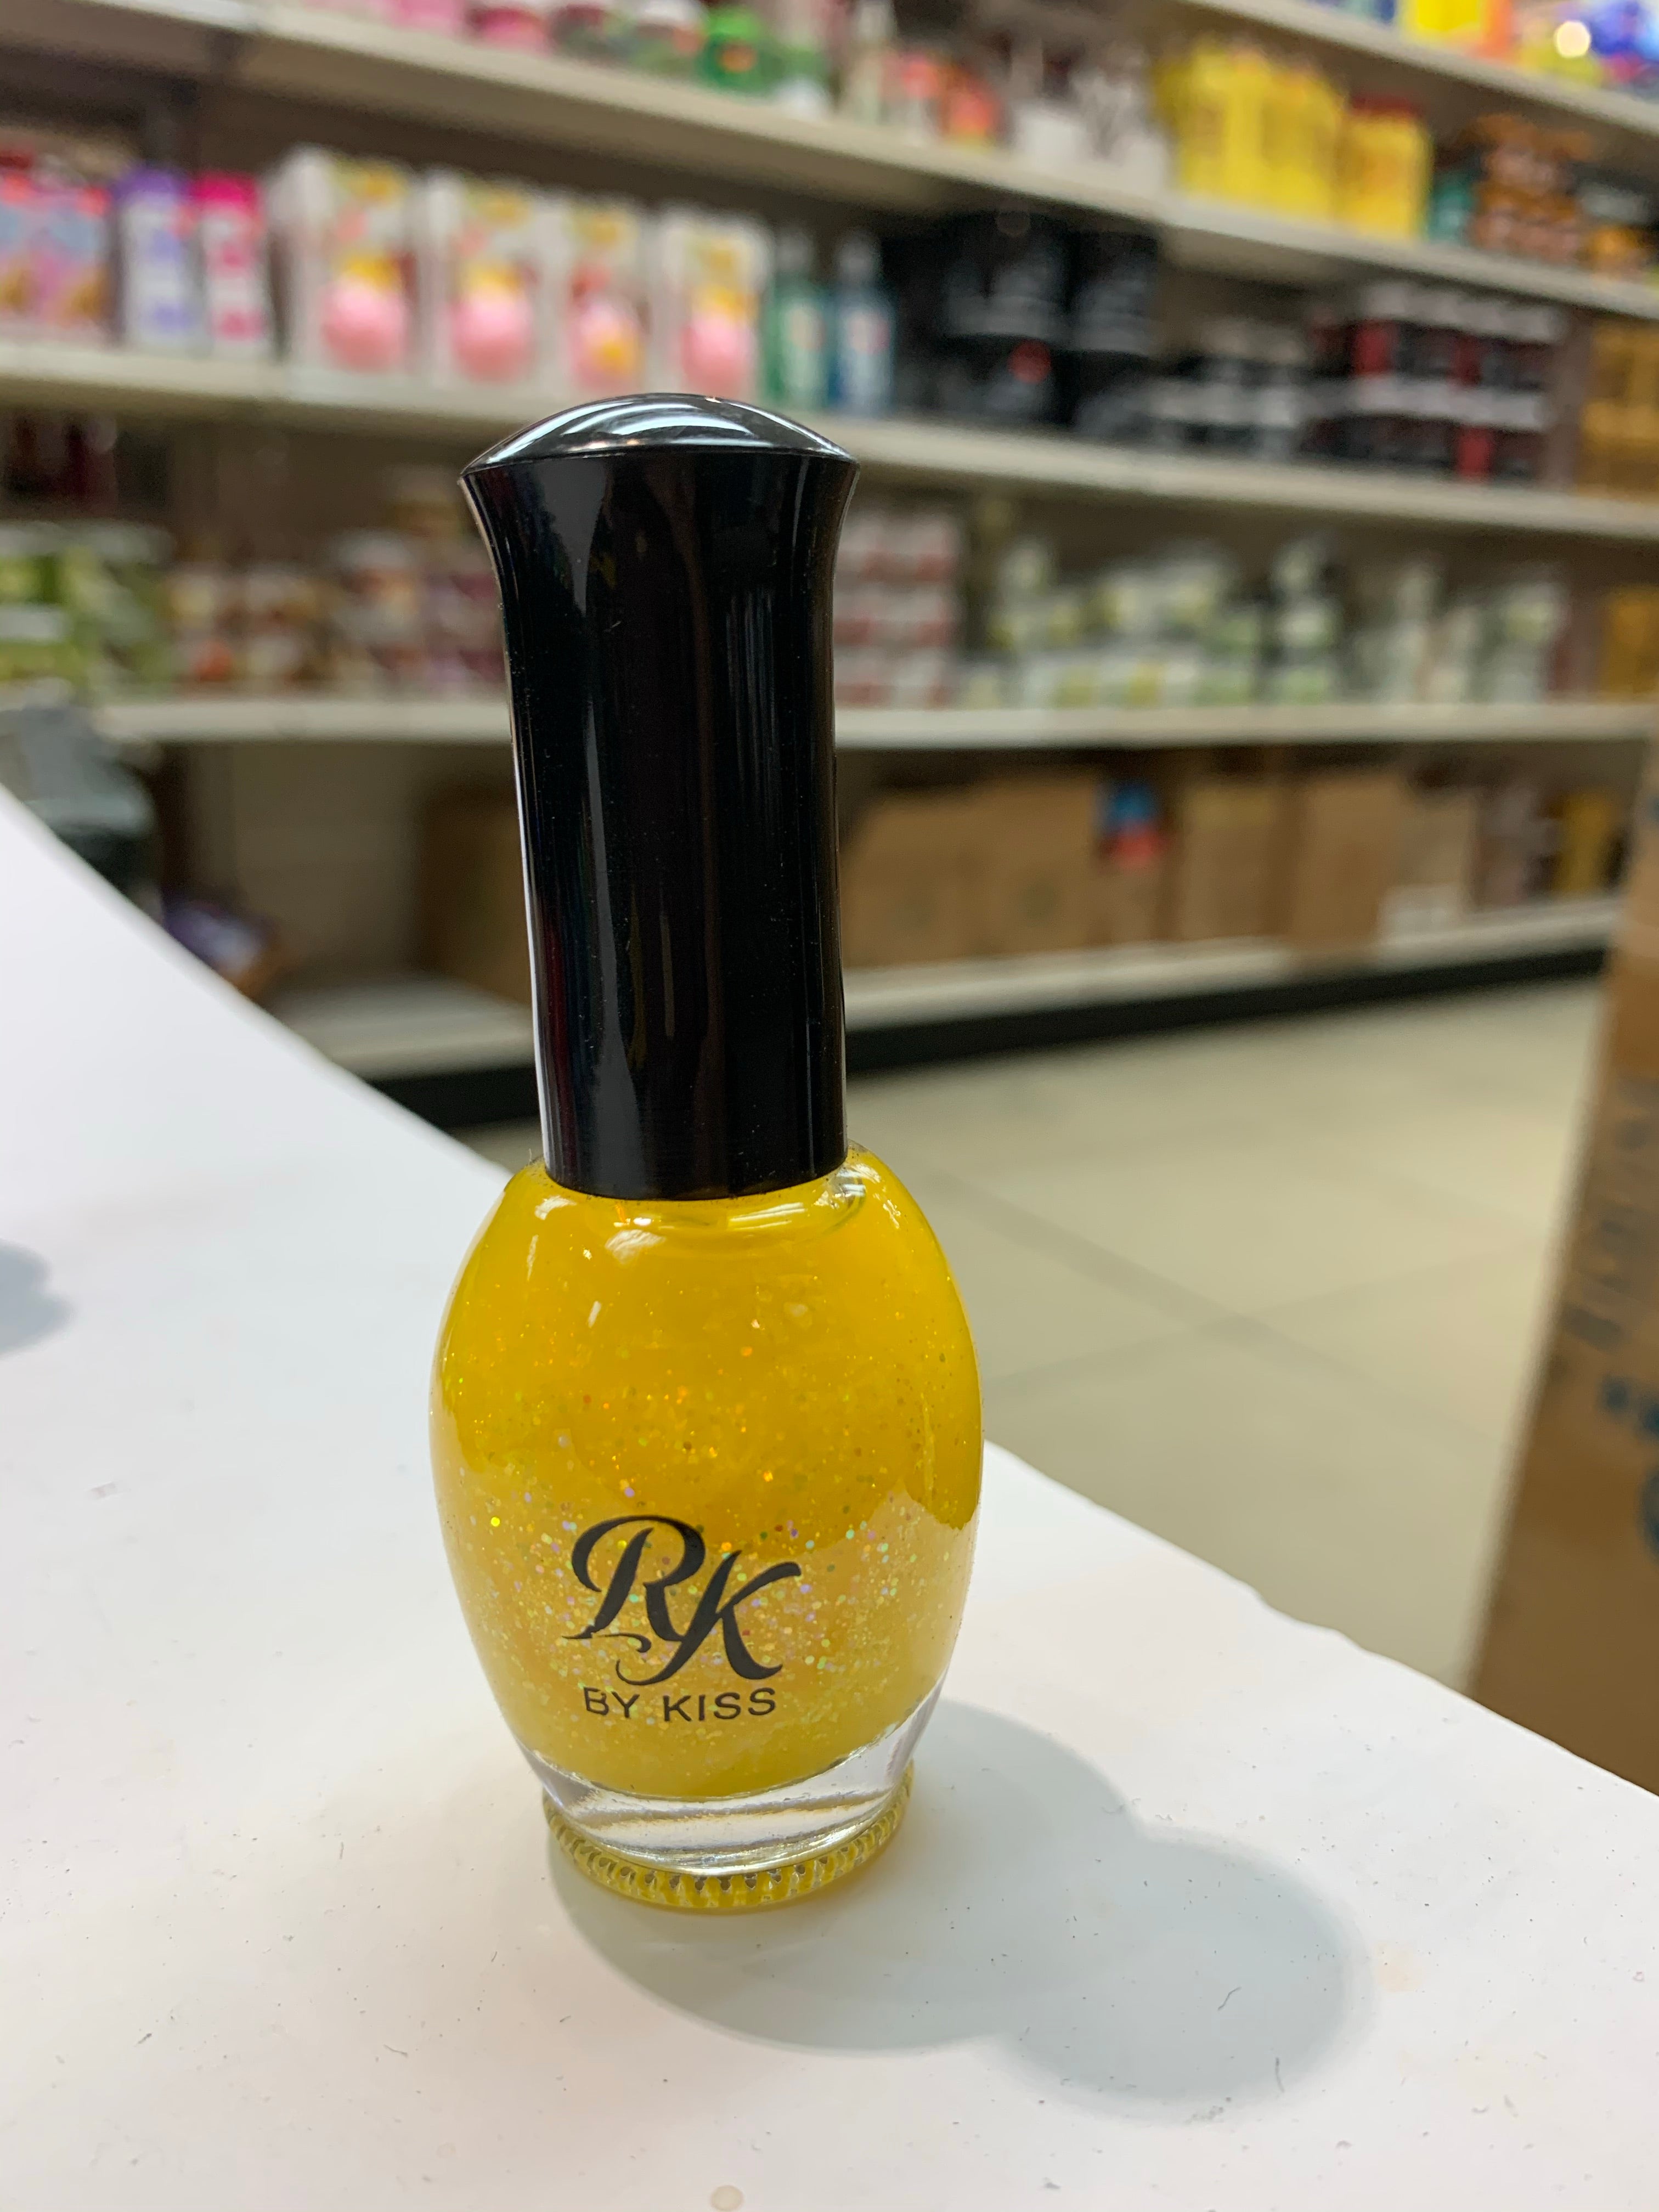 Rk by kiss high shine nail polish